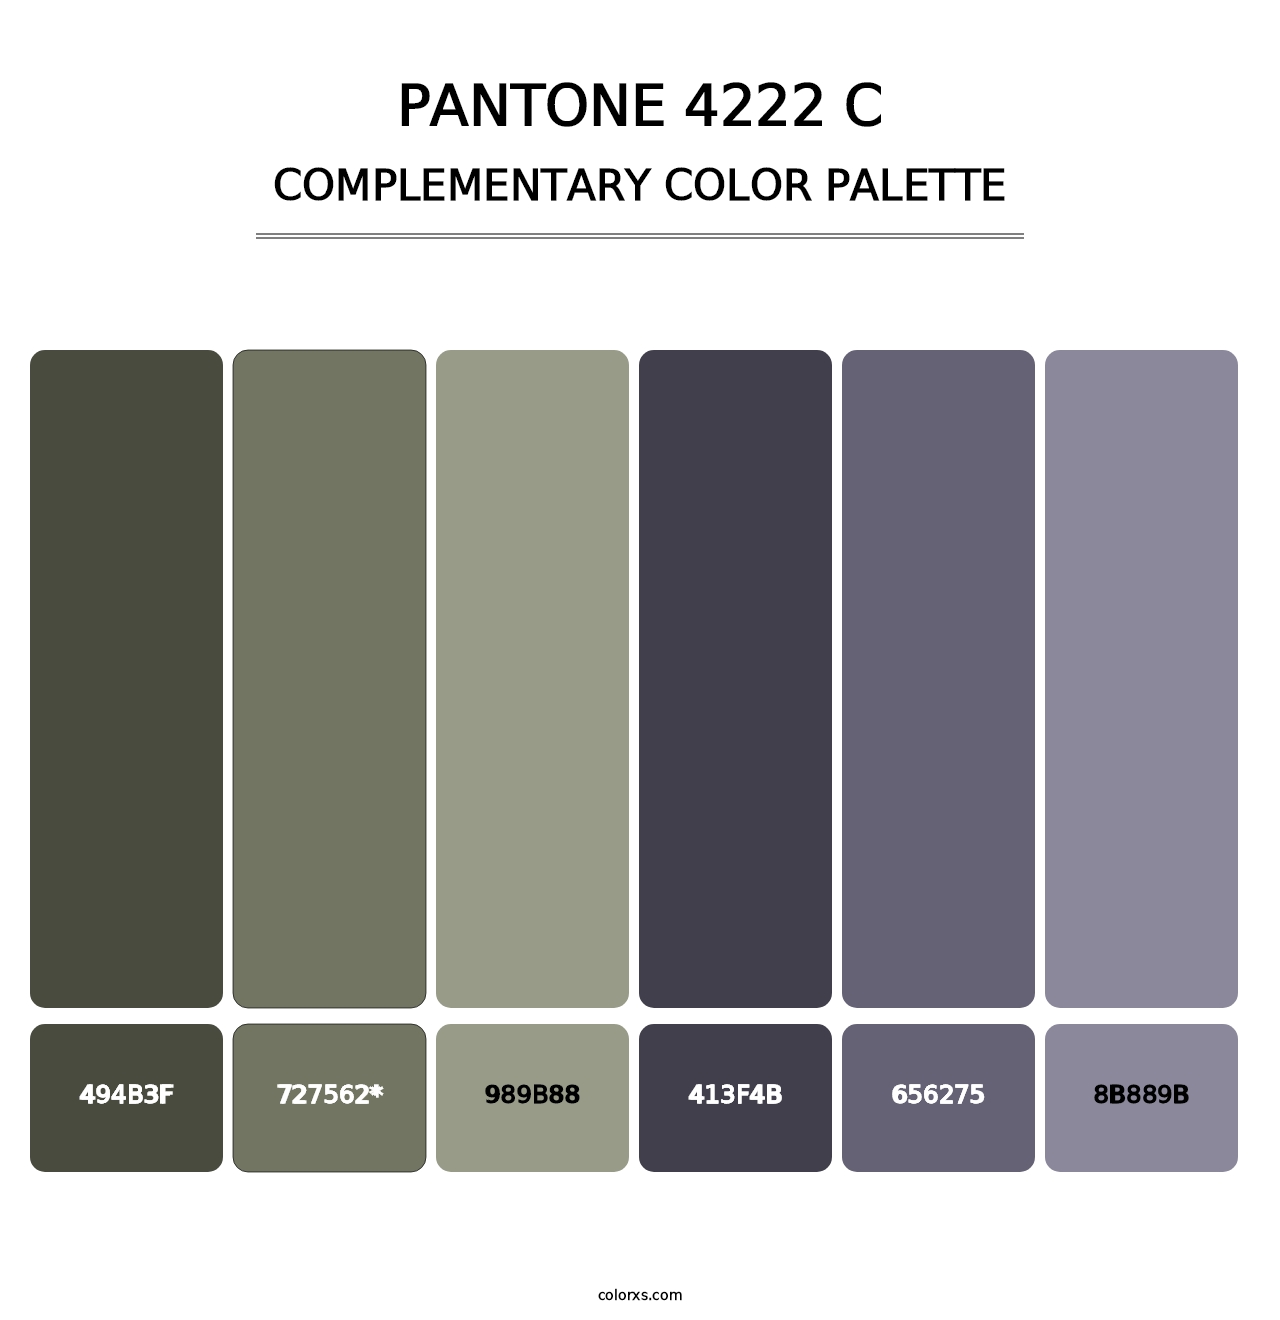 PANTONE 4222 C - Complementary Color Palette